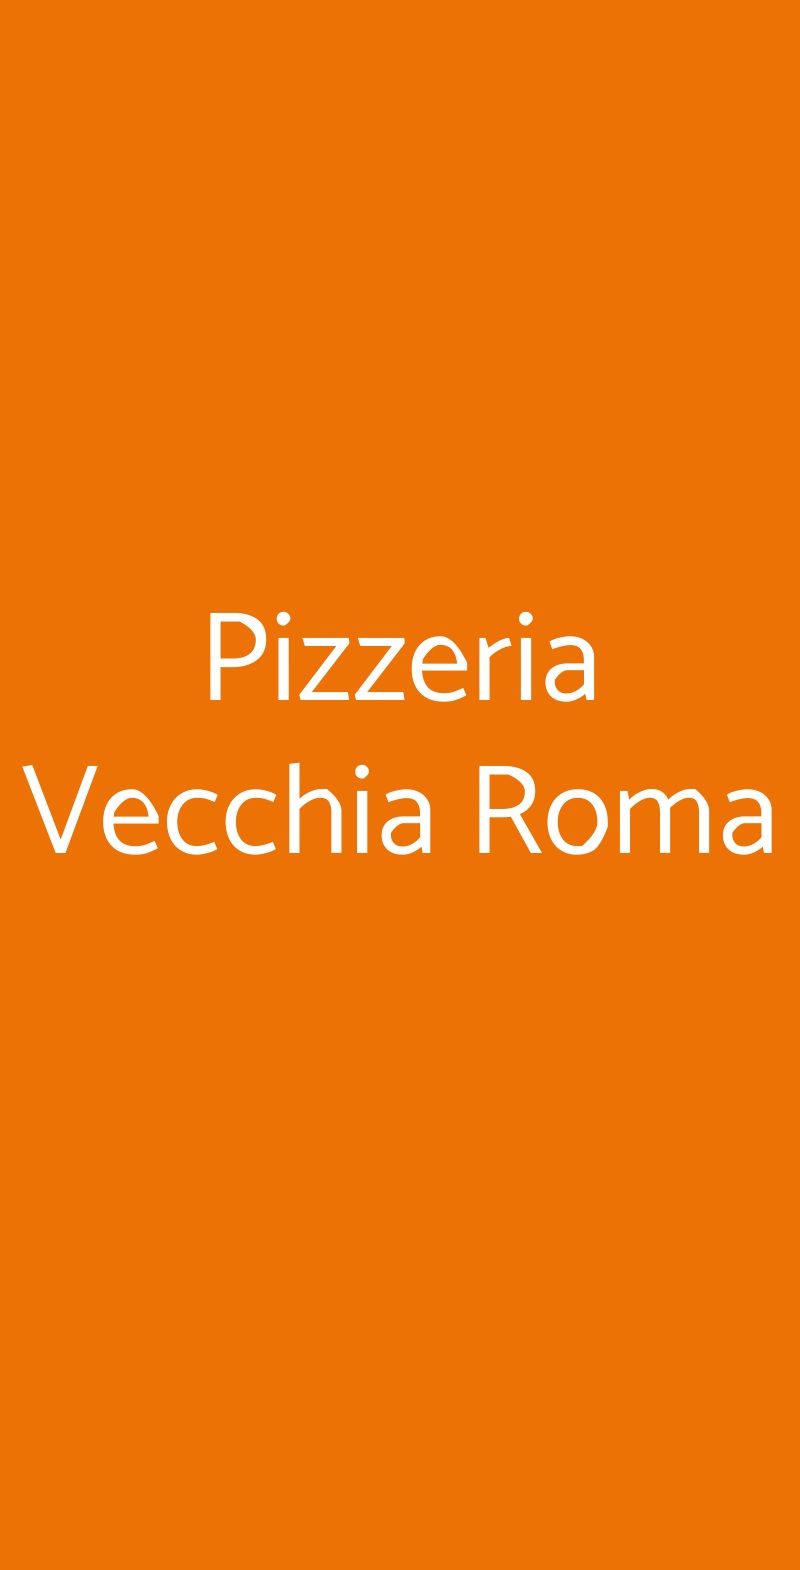 Pizzeria Vecchia Roma Bologna menù 1 pagina